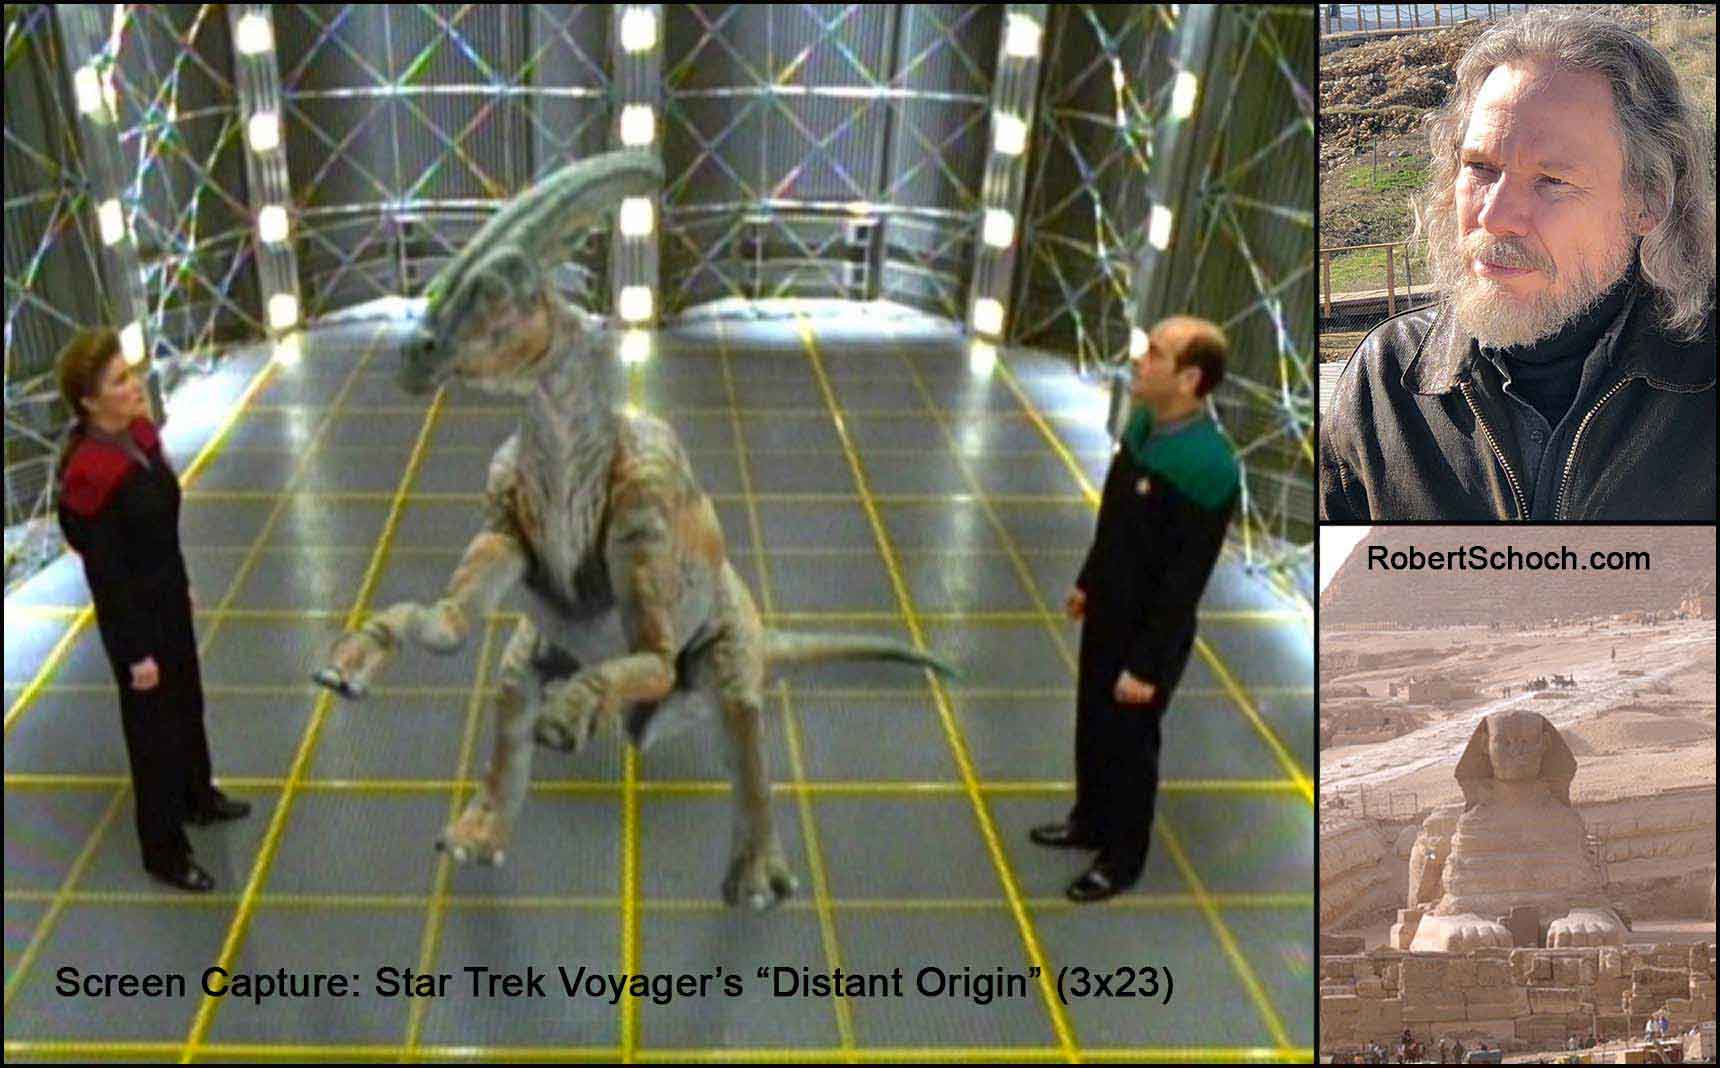 A meme regarding Star Trek Voyager's Distant Origin Episode